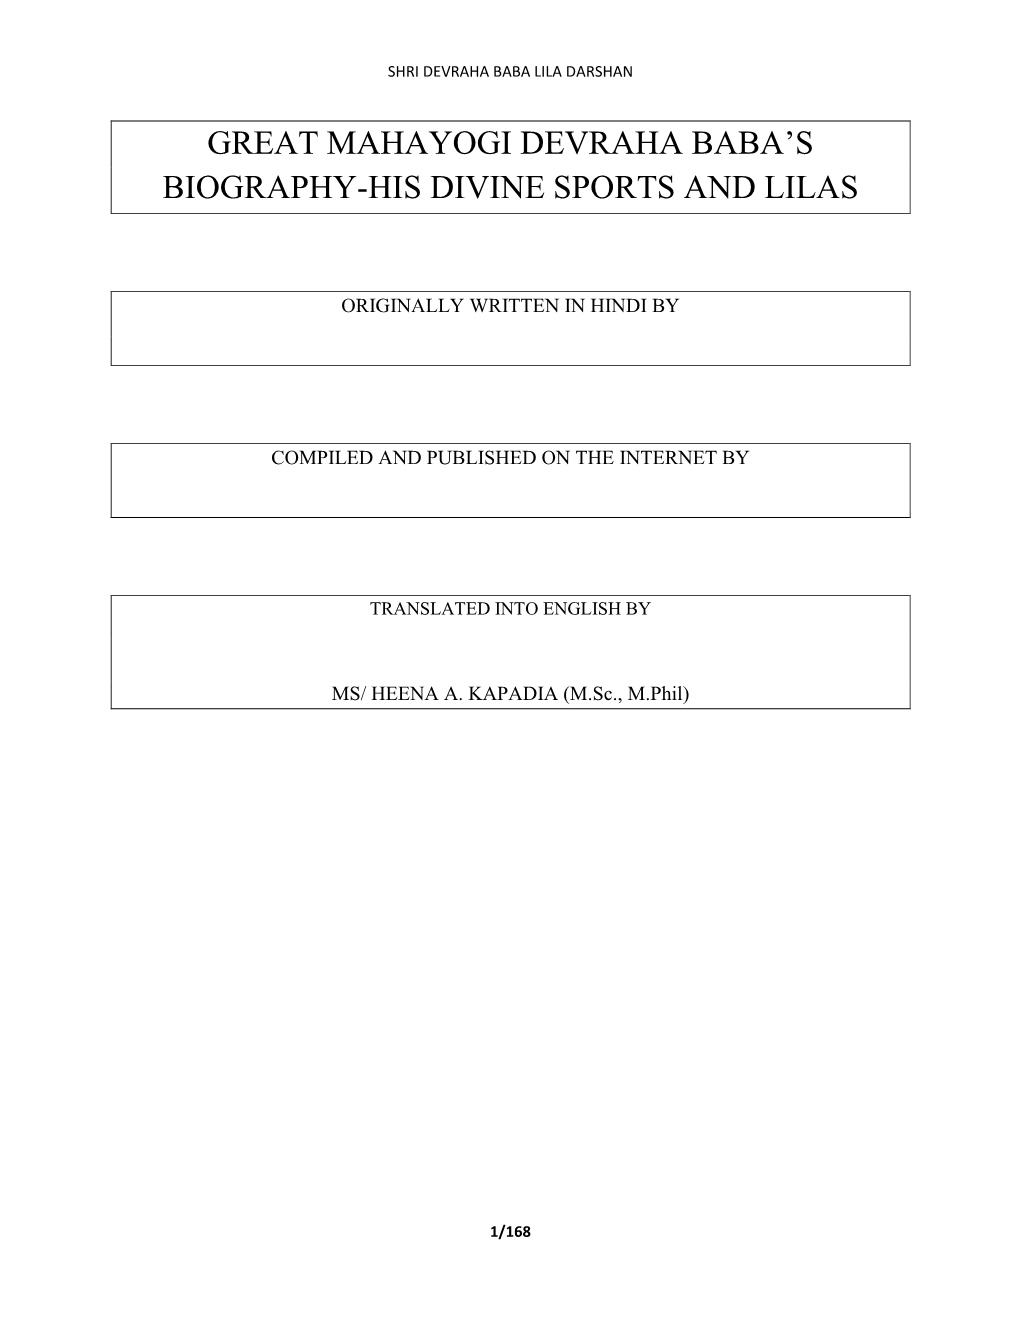 Great Mahayogi Devraha Baba's Biography-His Divine Sports and Lilas